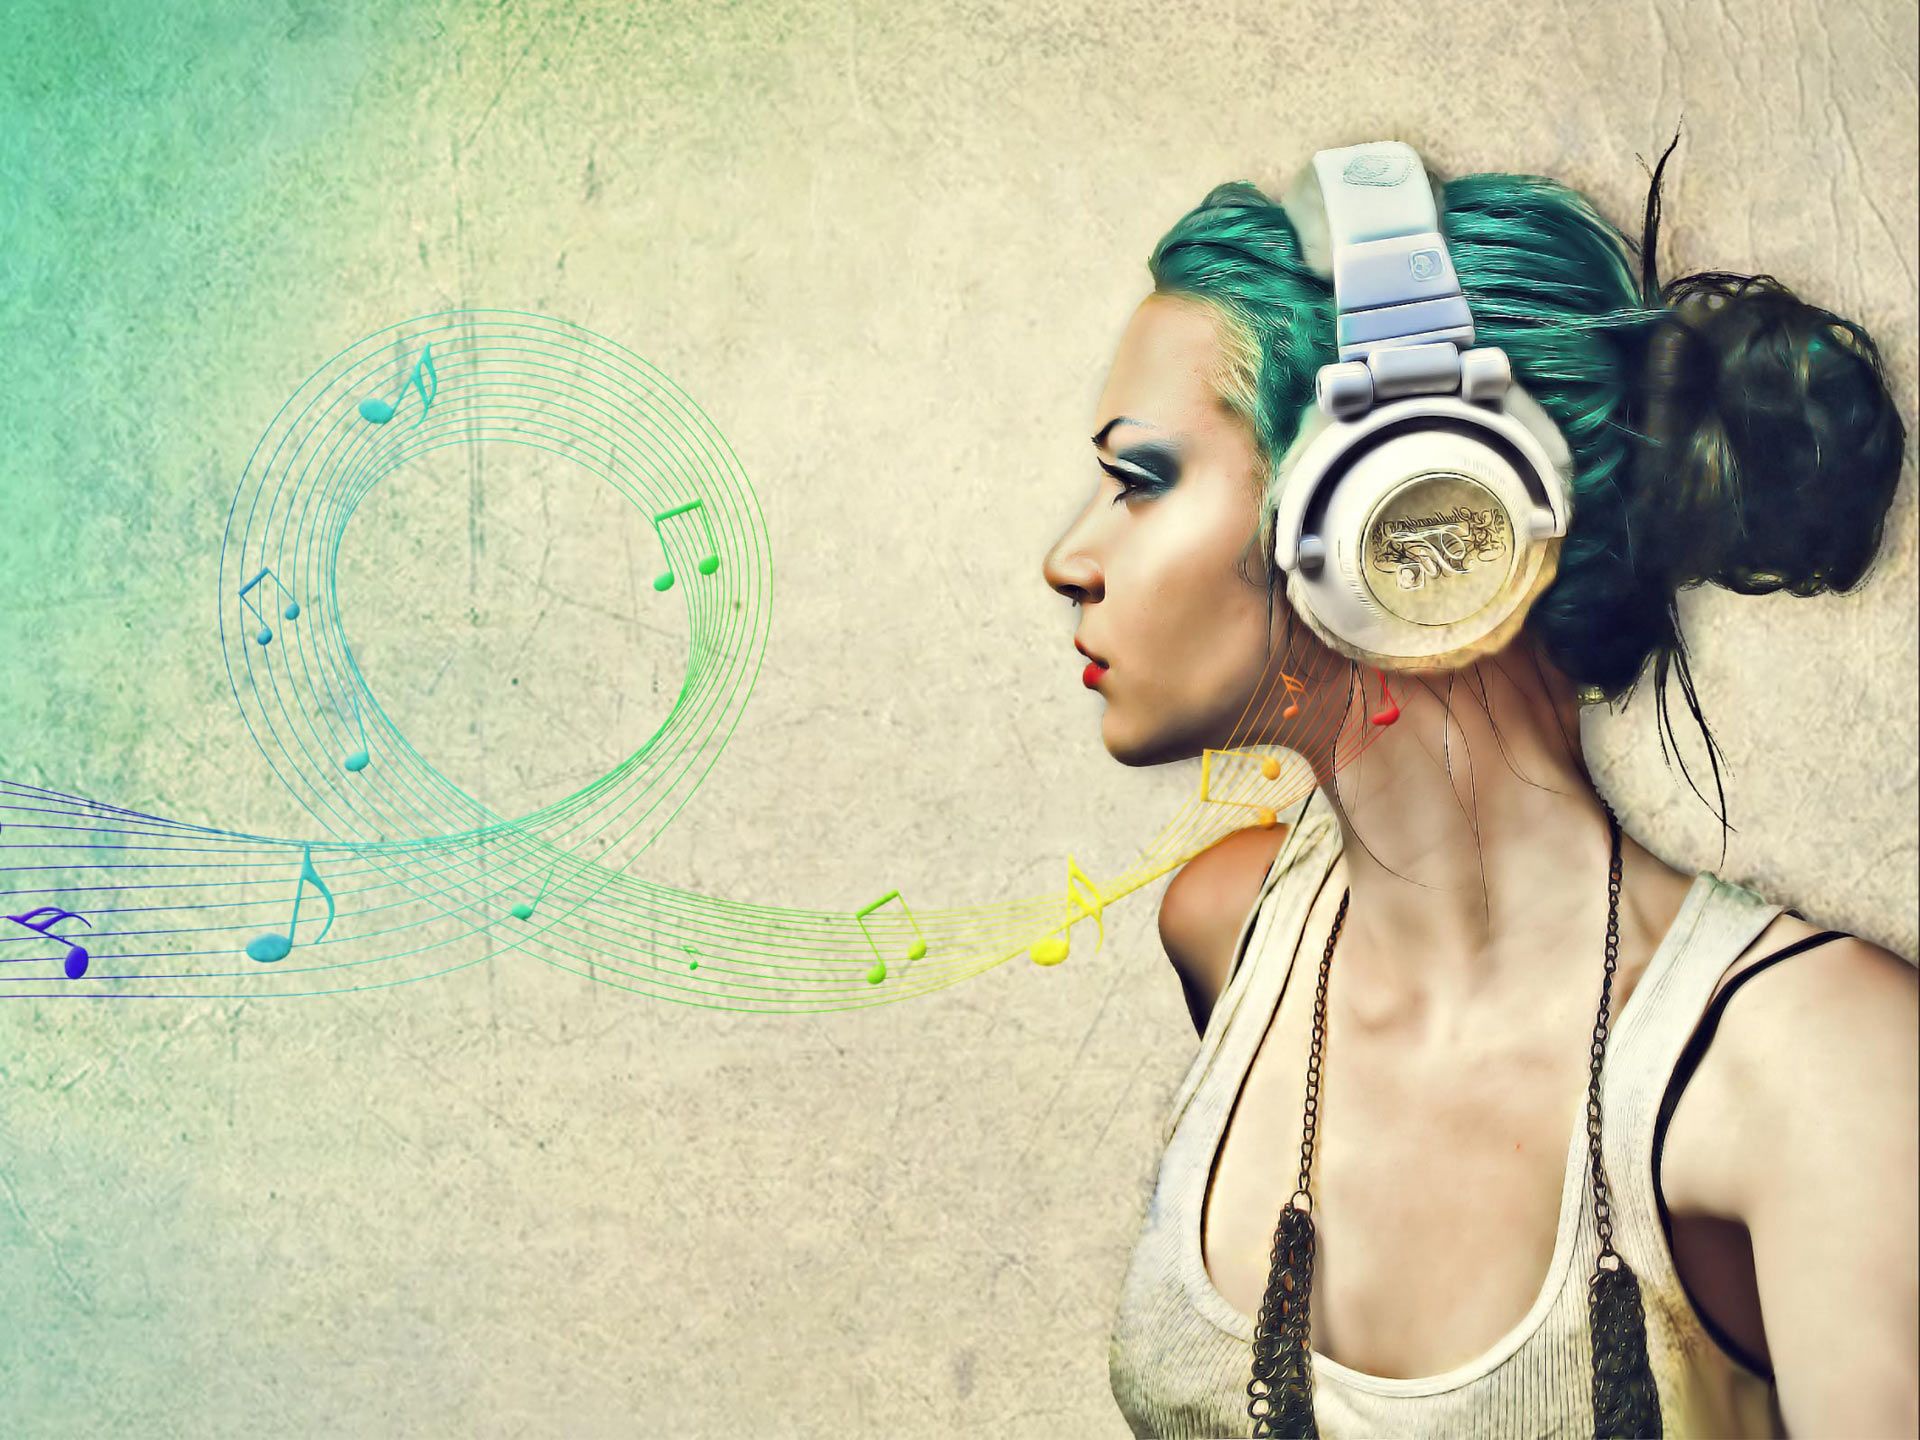 Trance music trance music music wallpaper girl with headphones